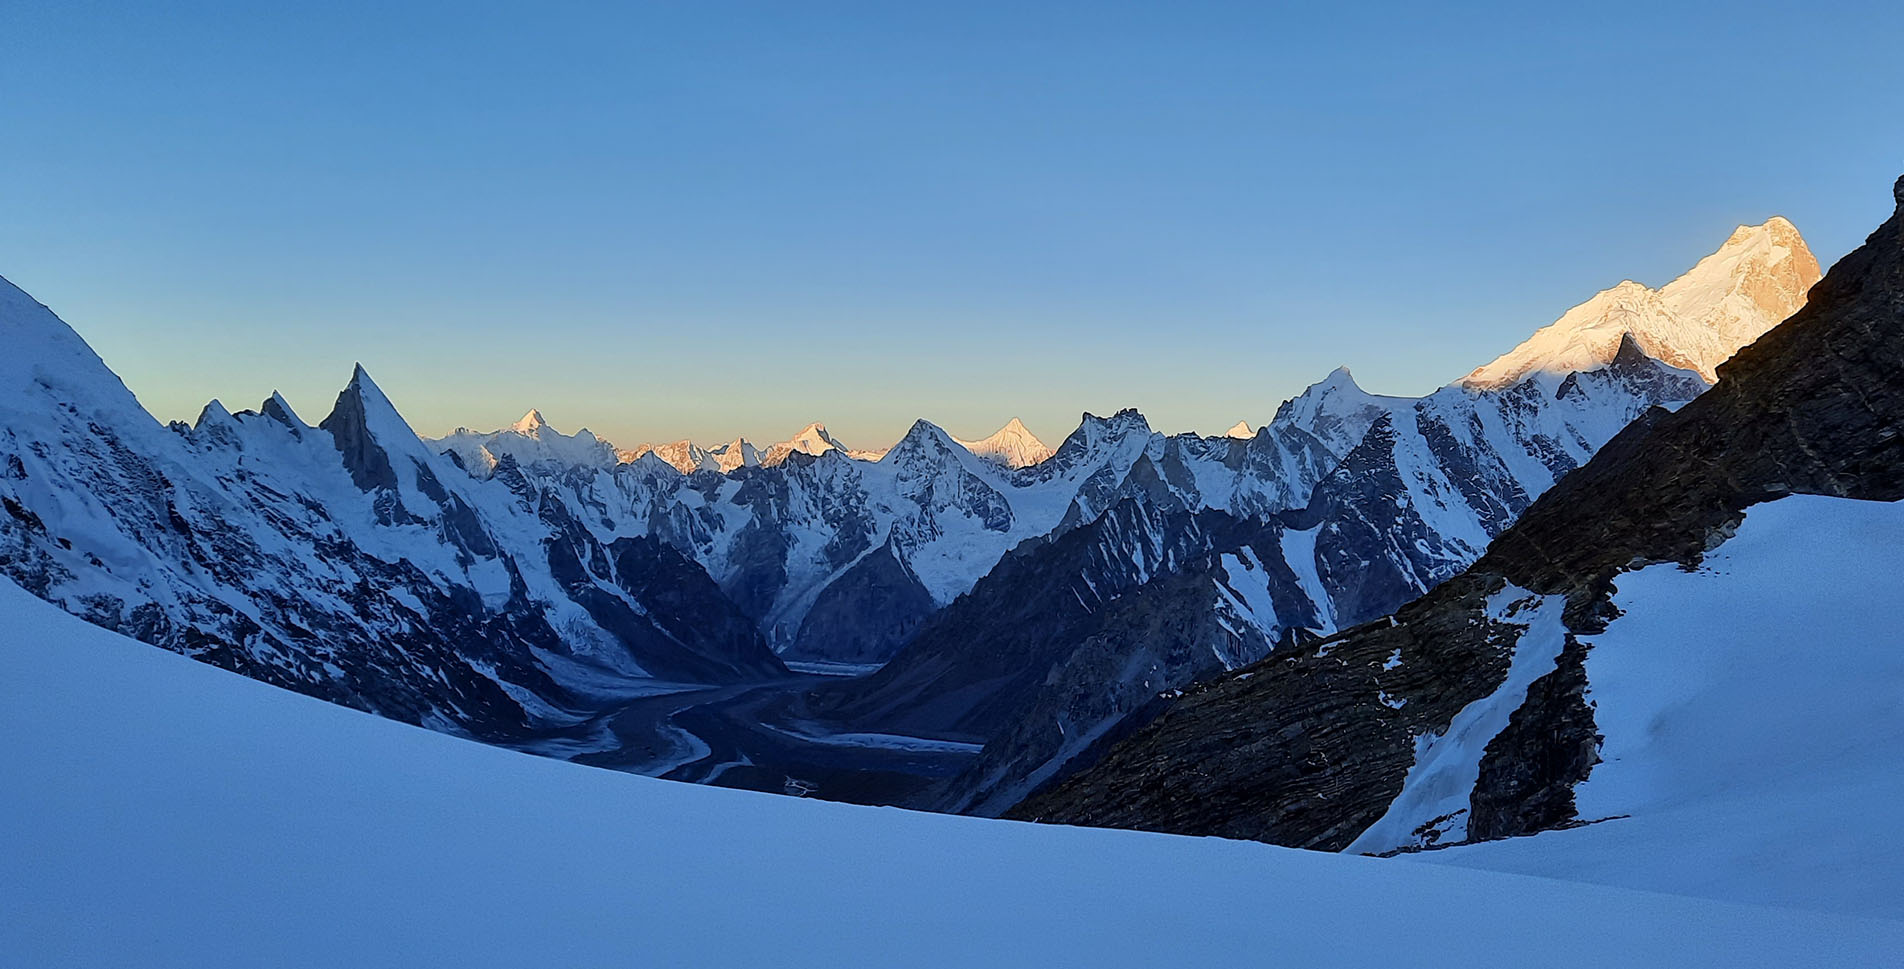 K2 Expedition Pakistan
